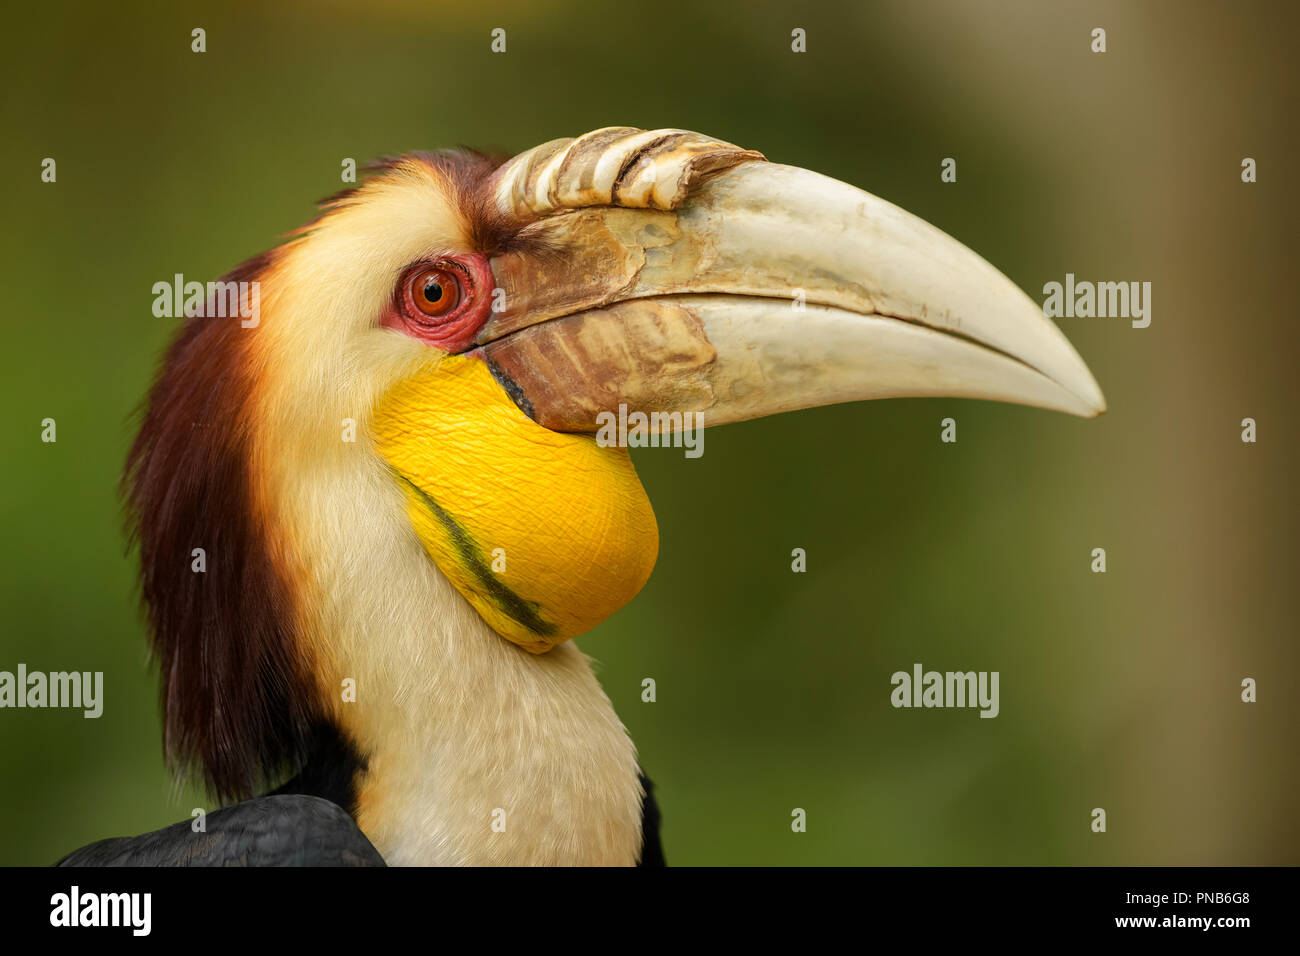 Inghirlandato Hornbill - Rhyticeros undulatus, bella colorata hornbill dal sud-est asiatico di foreste e boschi. Foto Stock